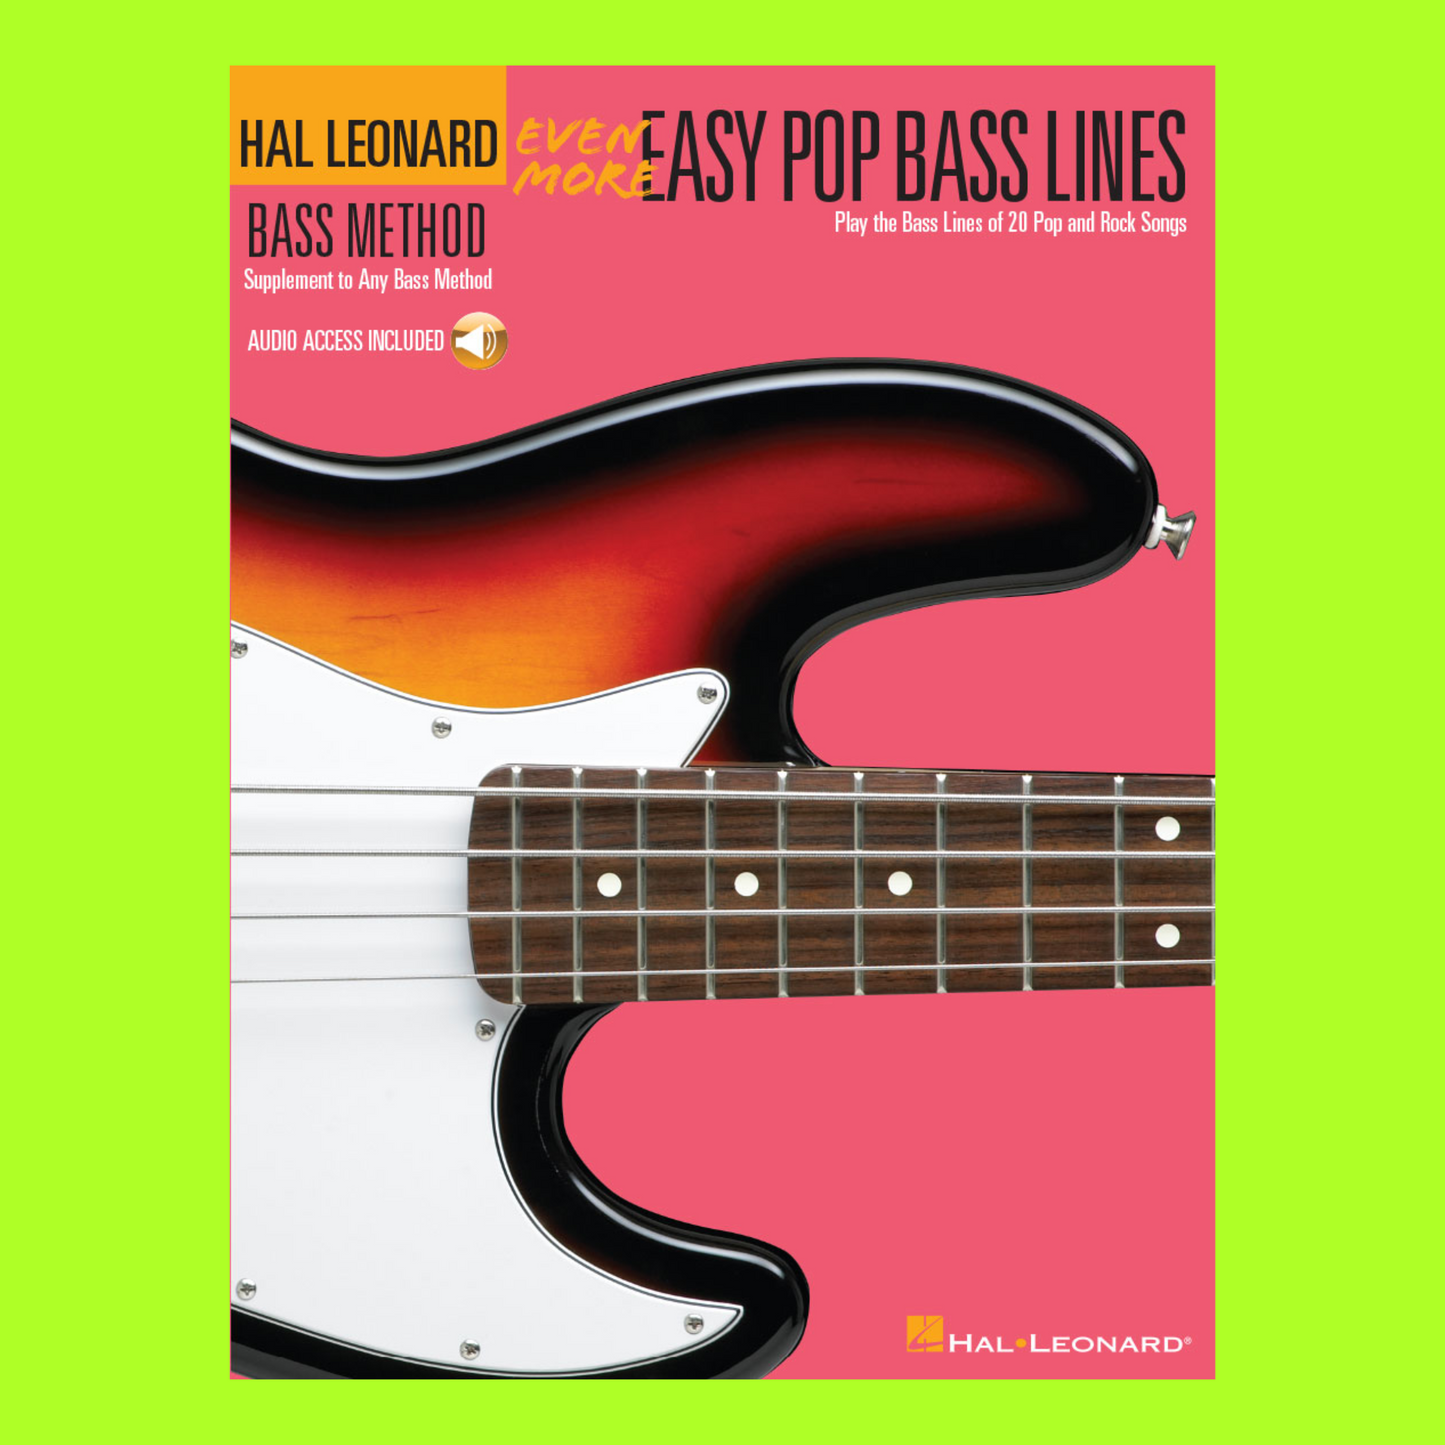 Hal Leonard Bass Method - Even More Easy Pop Bass Lines Book/Ola